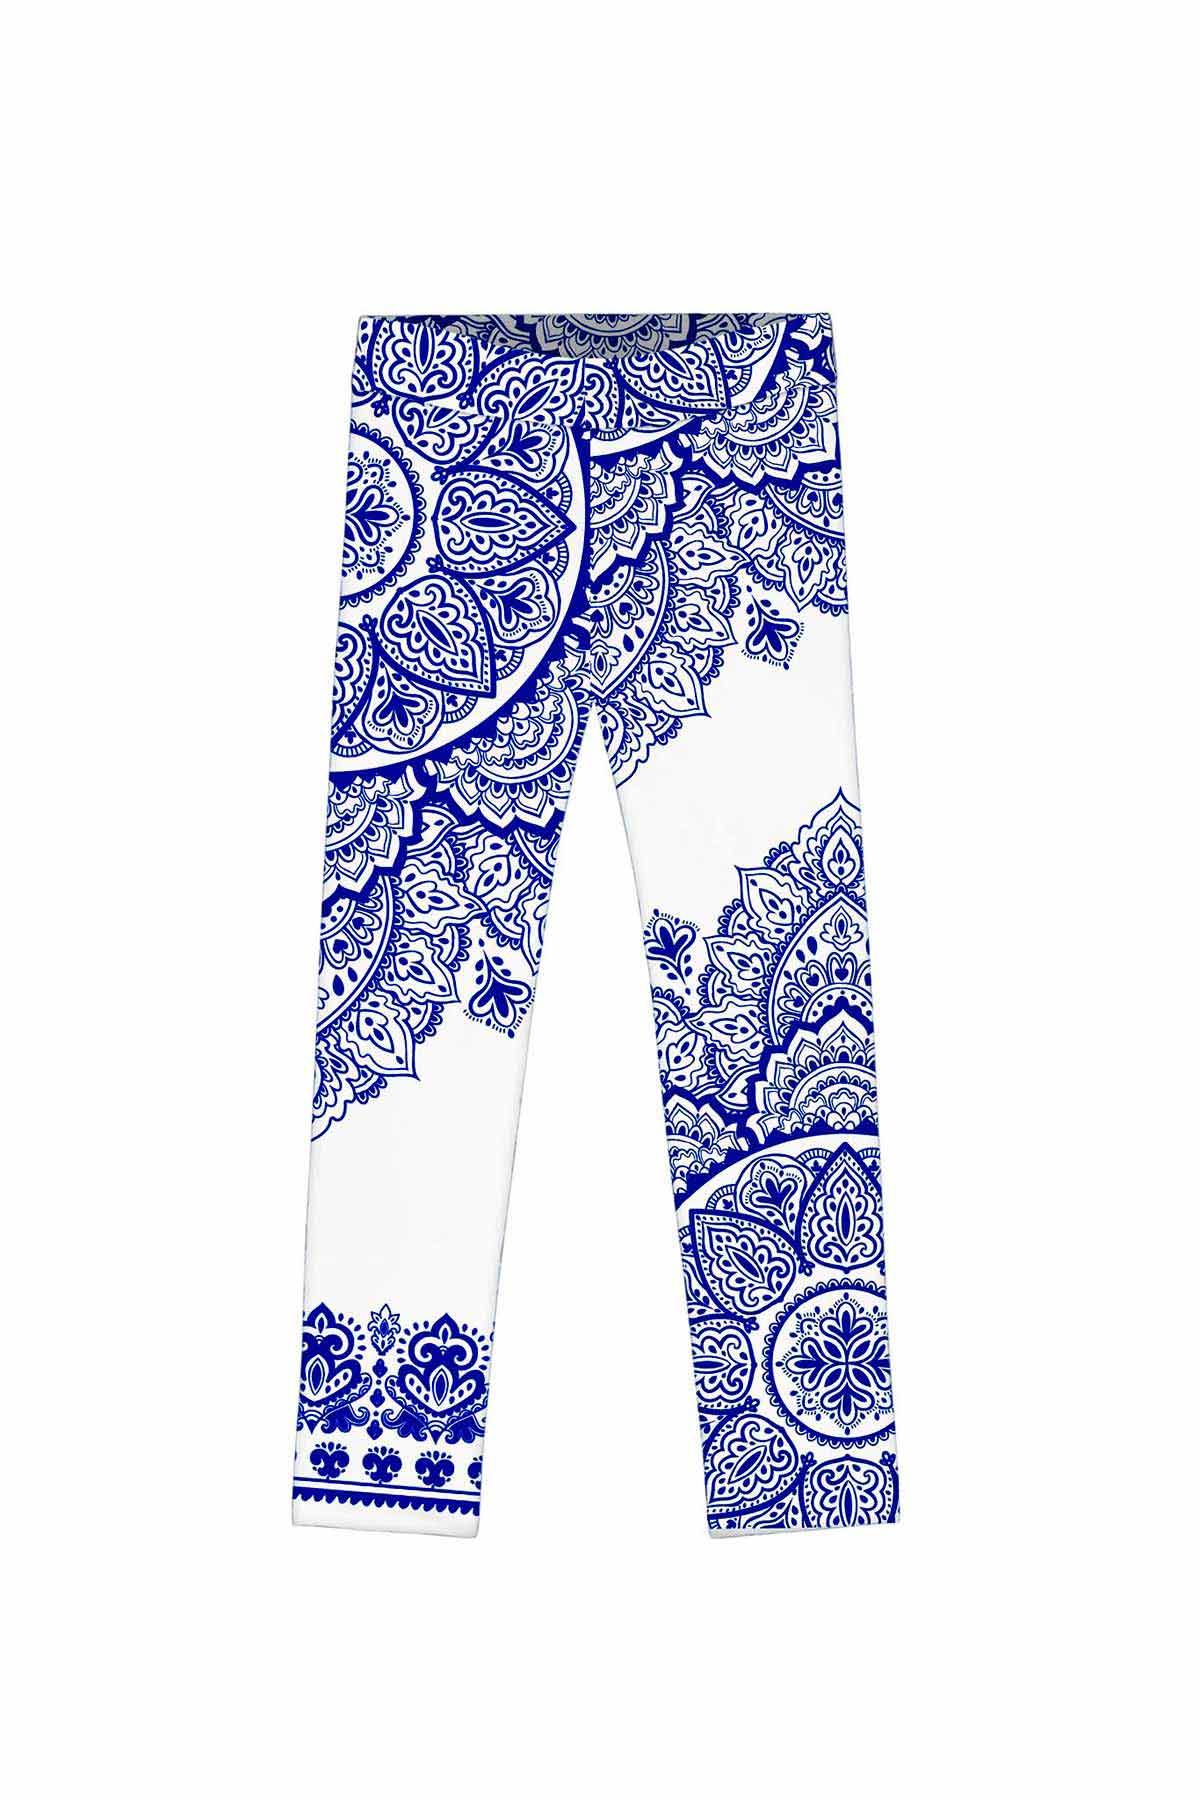 Image of BLACK FRIDAY SALE! Nirvana Lucy White Blue Geometric Boho Print Trendy Leggings - Kids